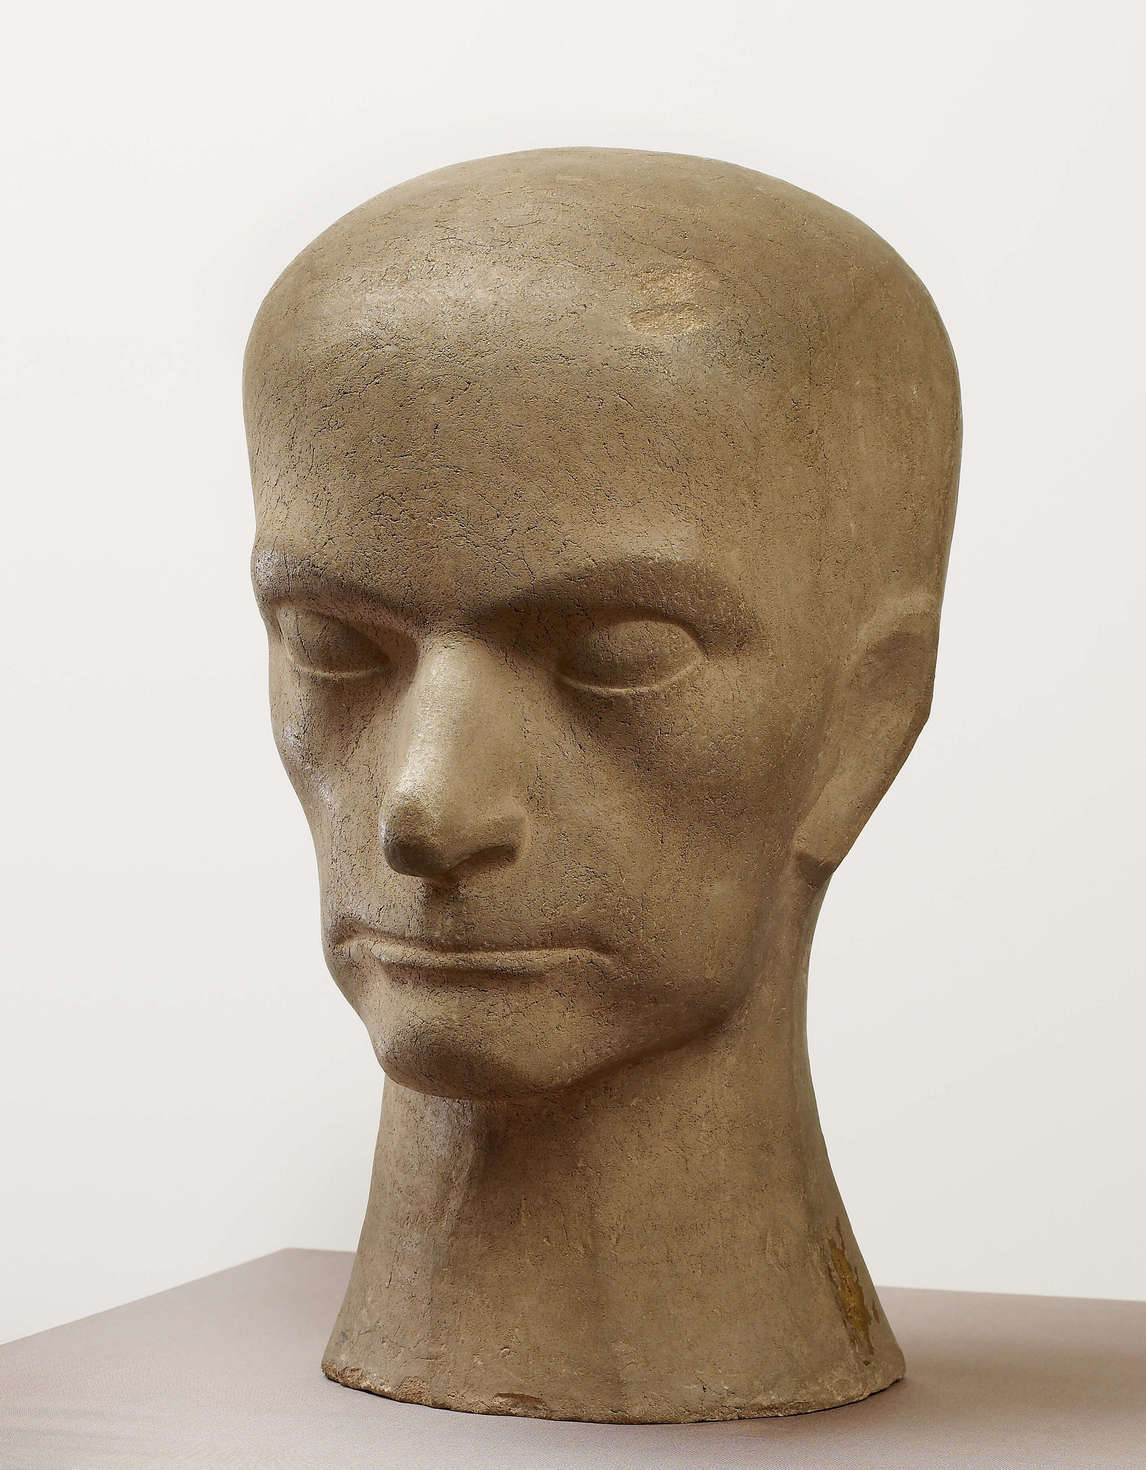 Art Canada Institute, Raymond Duchamp-Villon, Head of Baudelaire, 1911